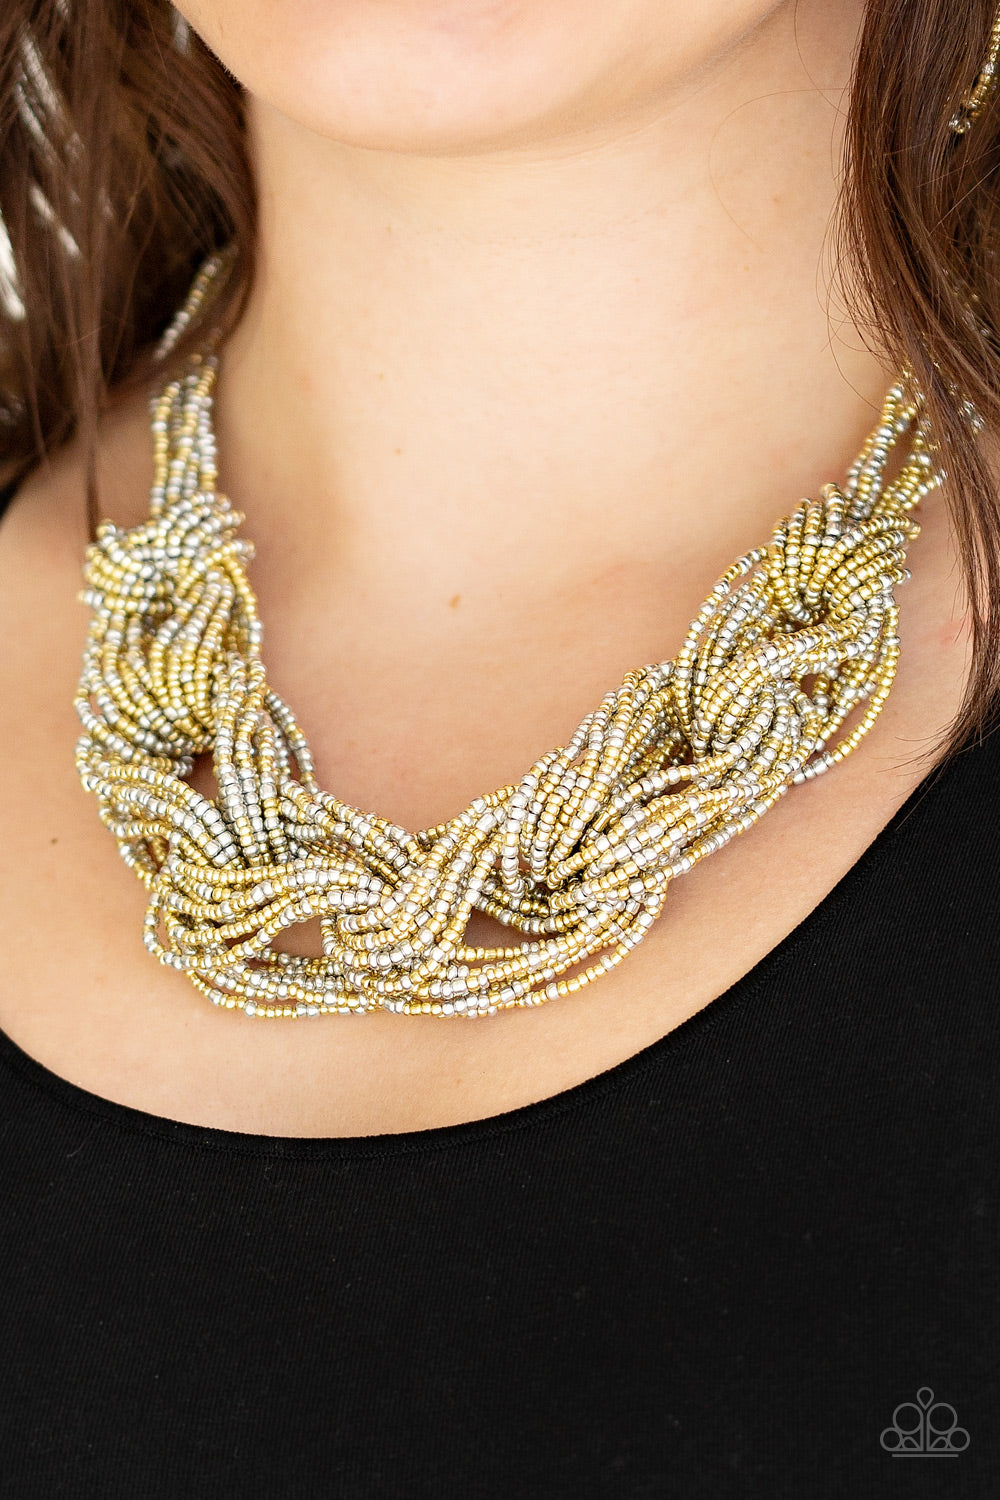 Paparazzi Accessories City Catwalk - Gold Necklaces - Lady T Accessories